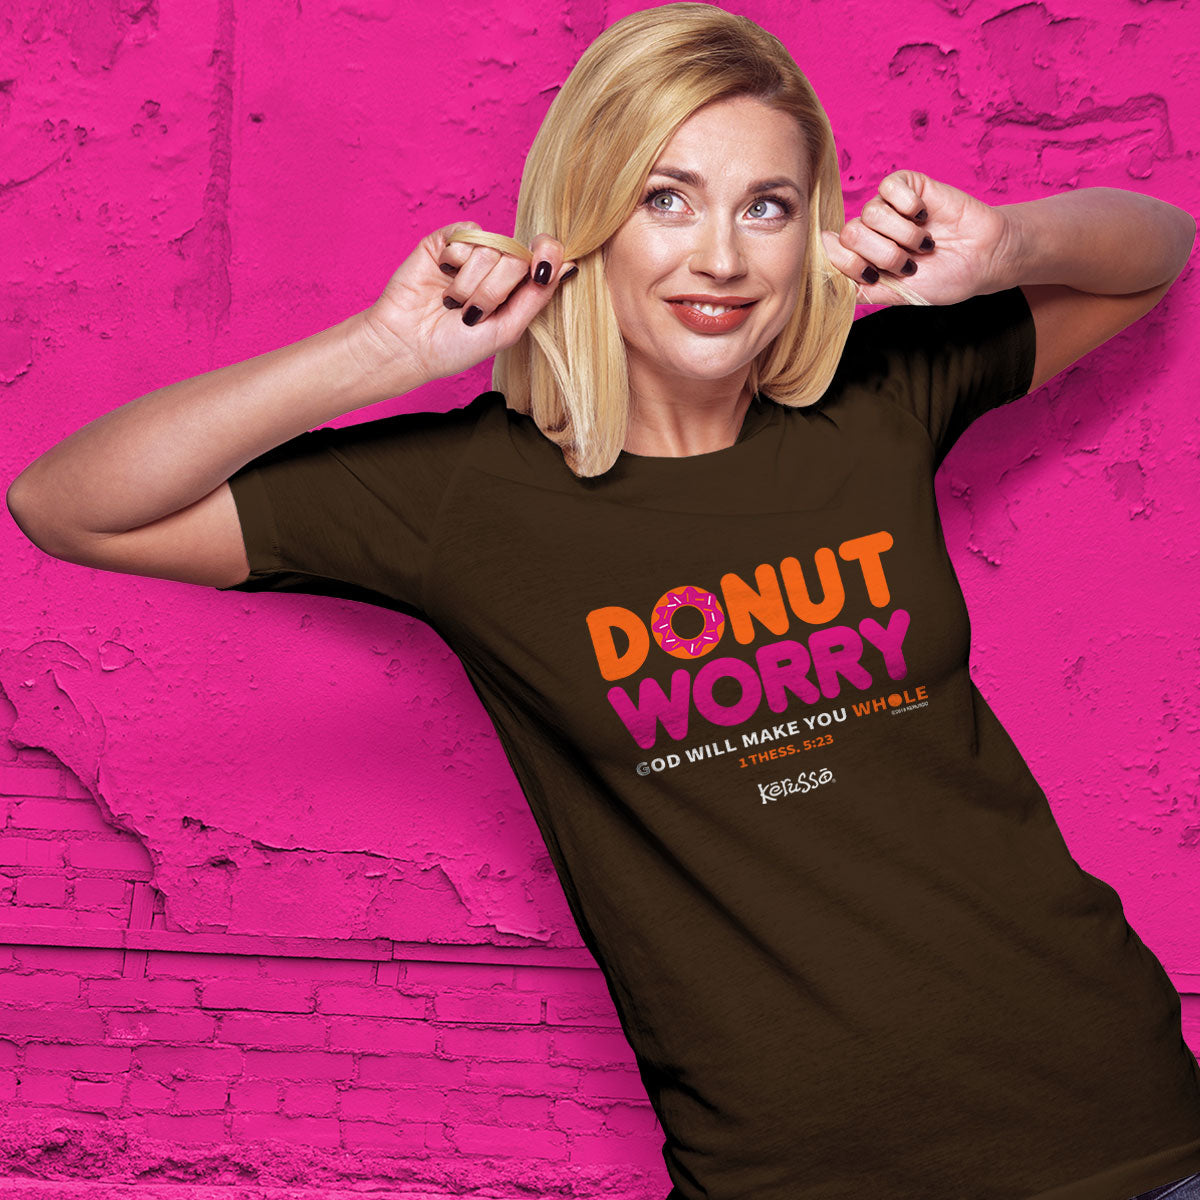 Kerusso Christian T-Shirt Donut